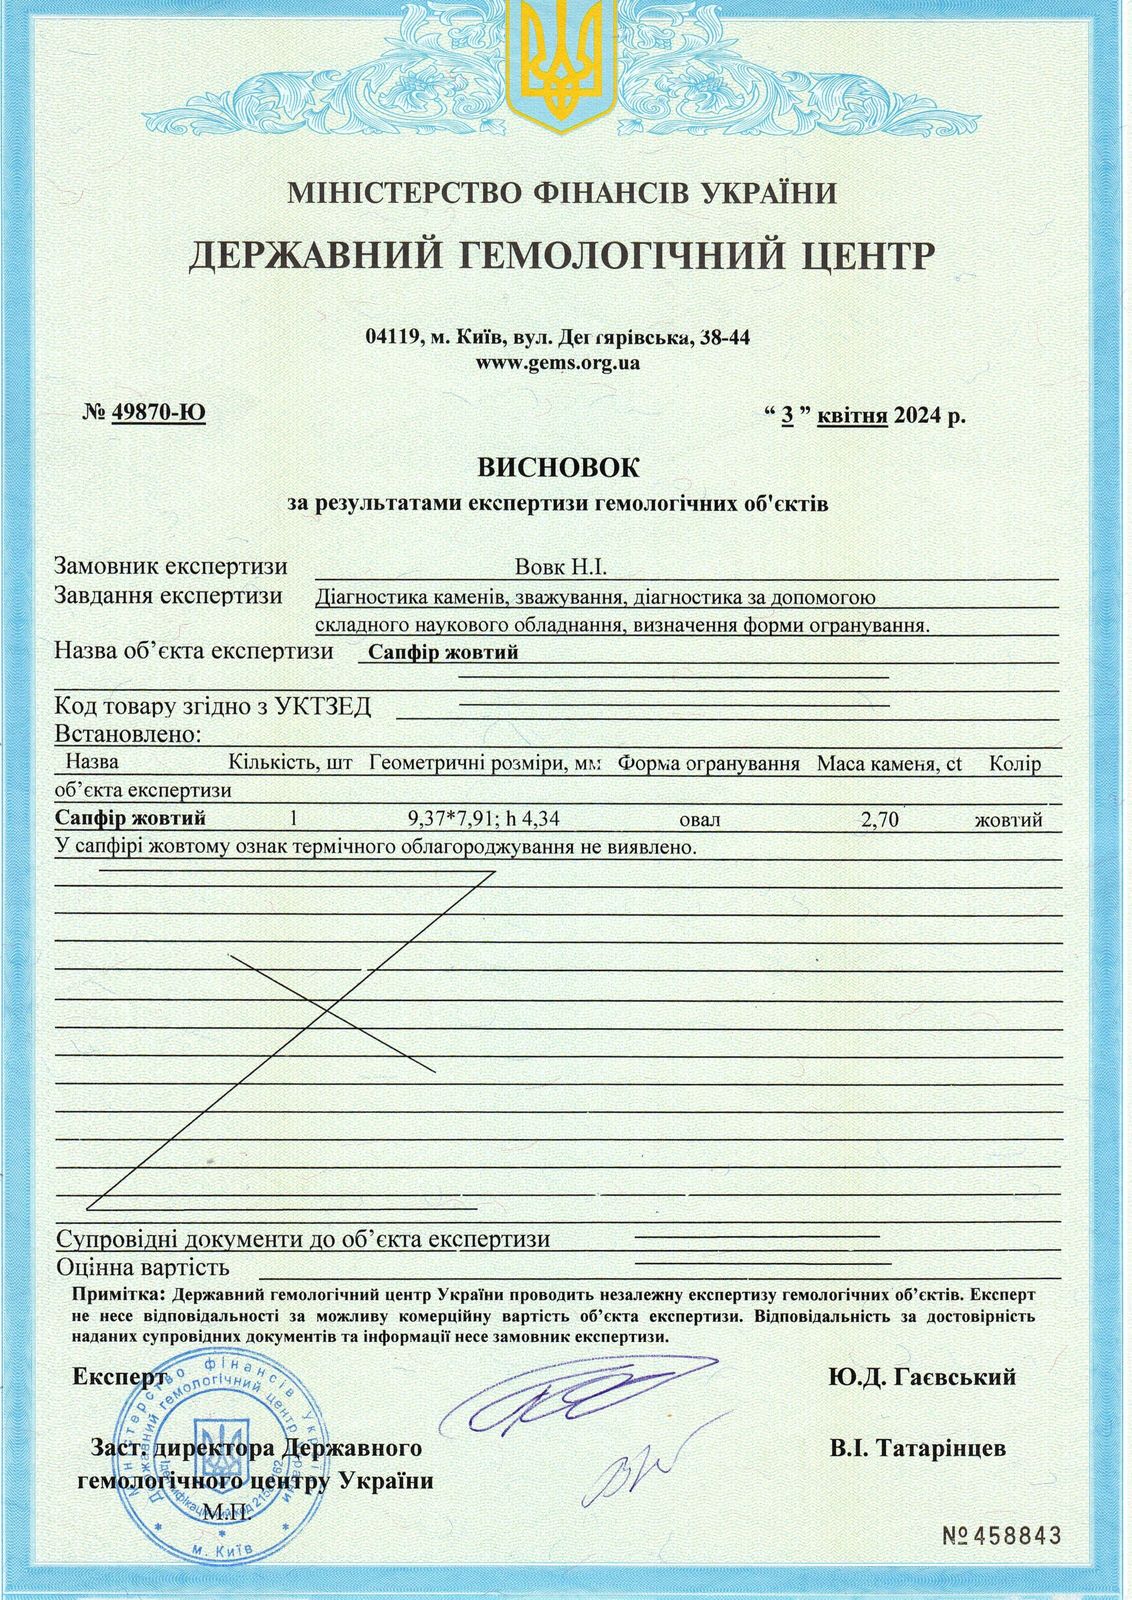 Сапфир желтый НЕ ГРЕТЫЙ 2,7 карат Сертификат ГГЦУ